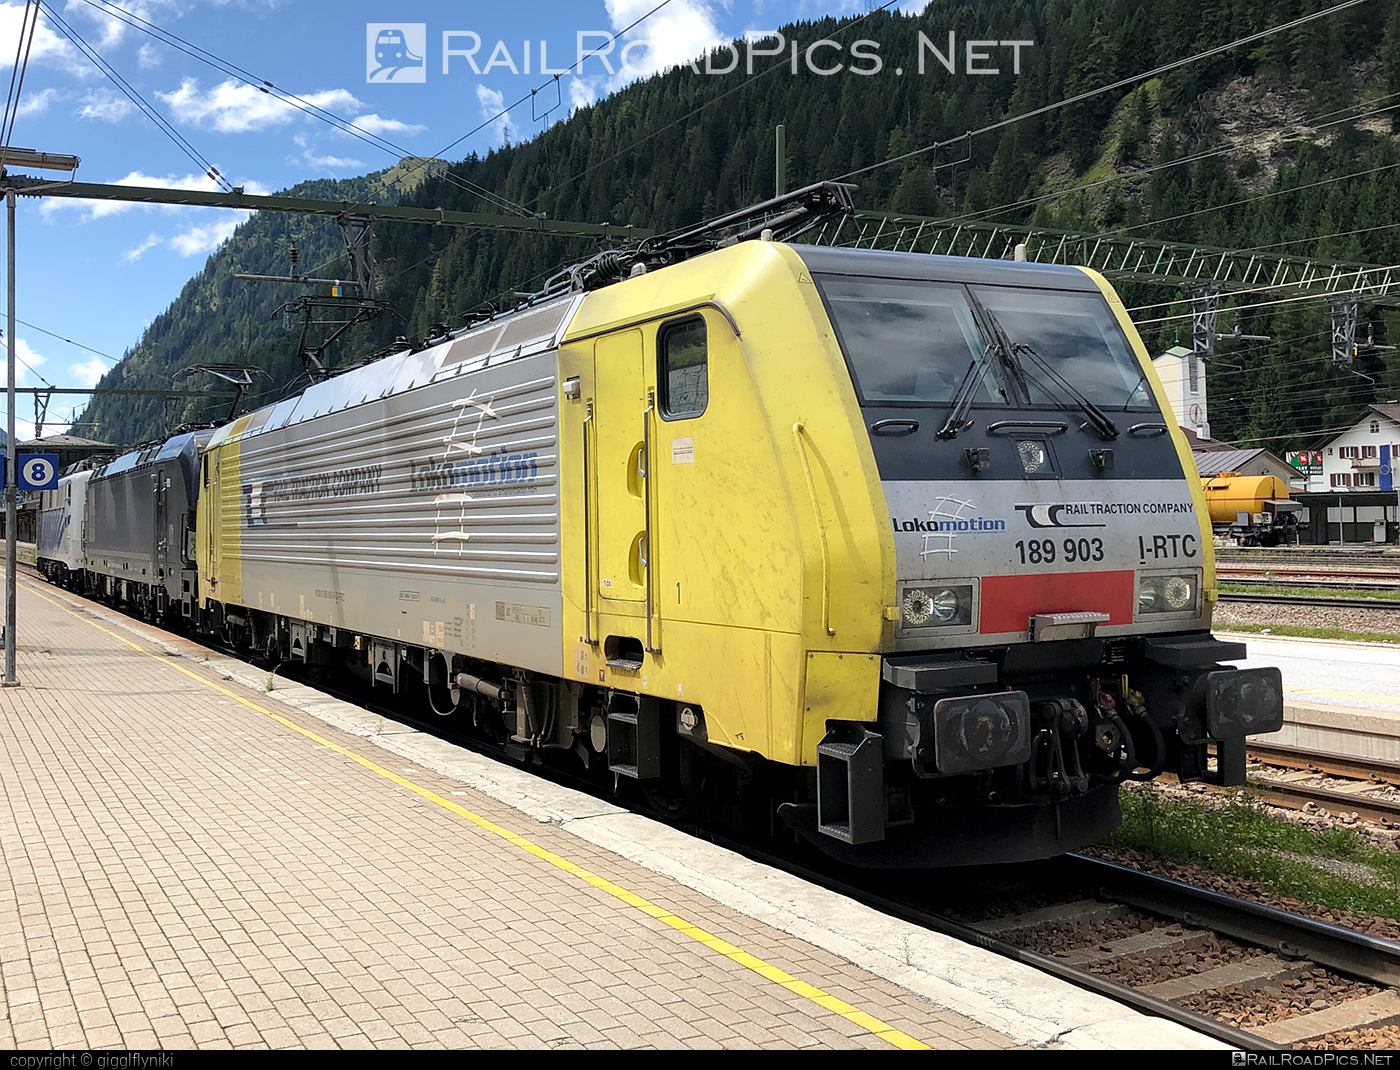 Siemens ES 64 F4 - 189 903 operated by Rail Traction Company #RailTractionCompany #es64 #es64f4 #eurosprinter #rtc #siemens #siemensEs64 #siemensEs64f4